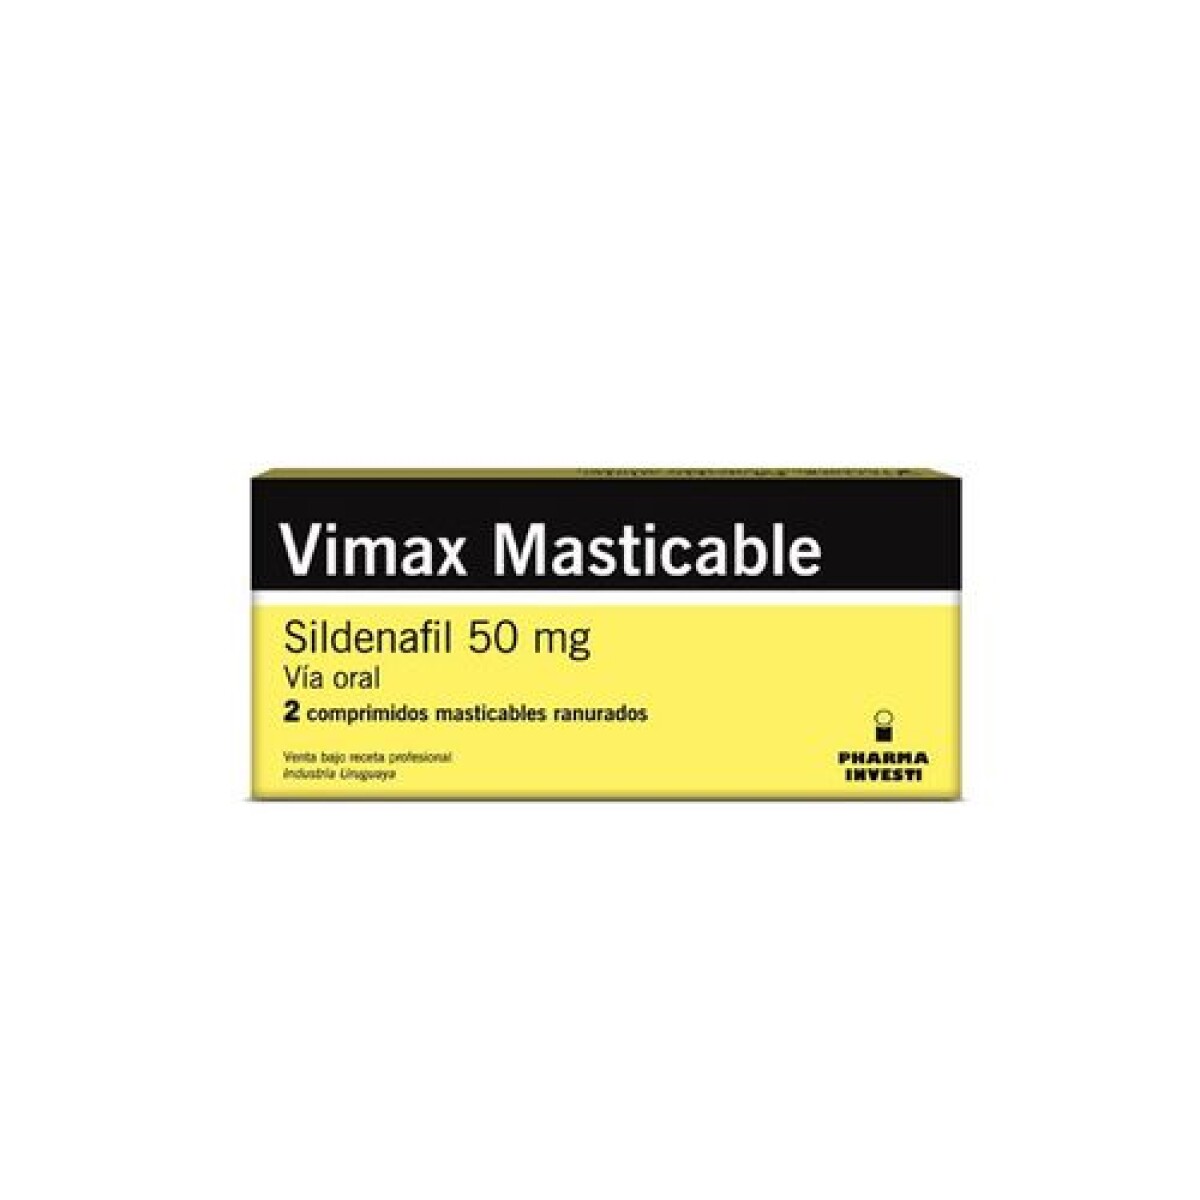 VIMAX MASTICABLE 50 MG 2 COMPRIMIDOS 